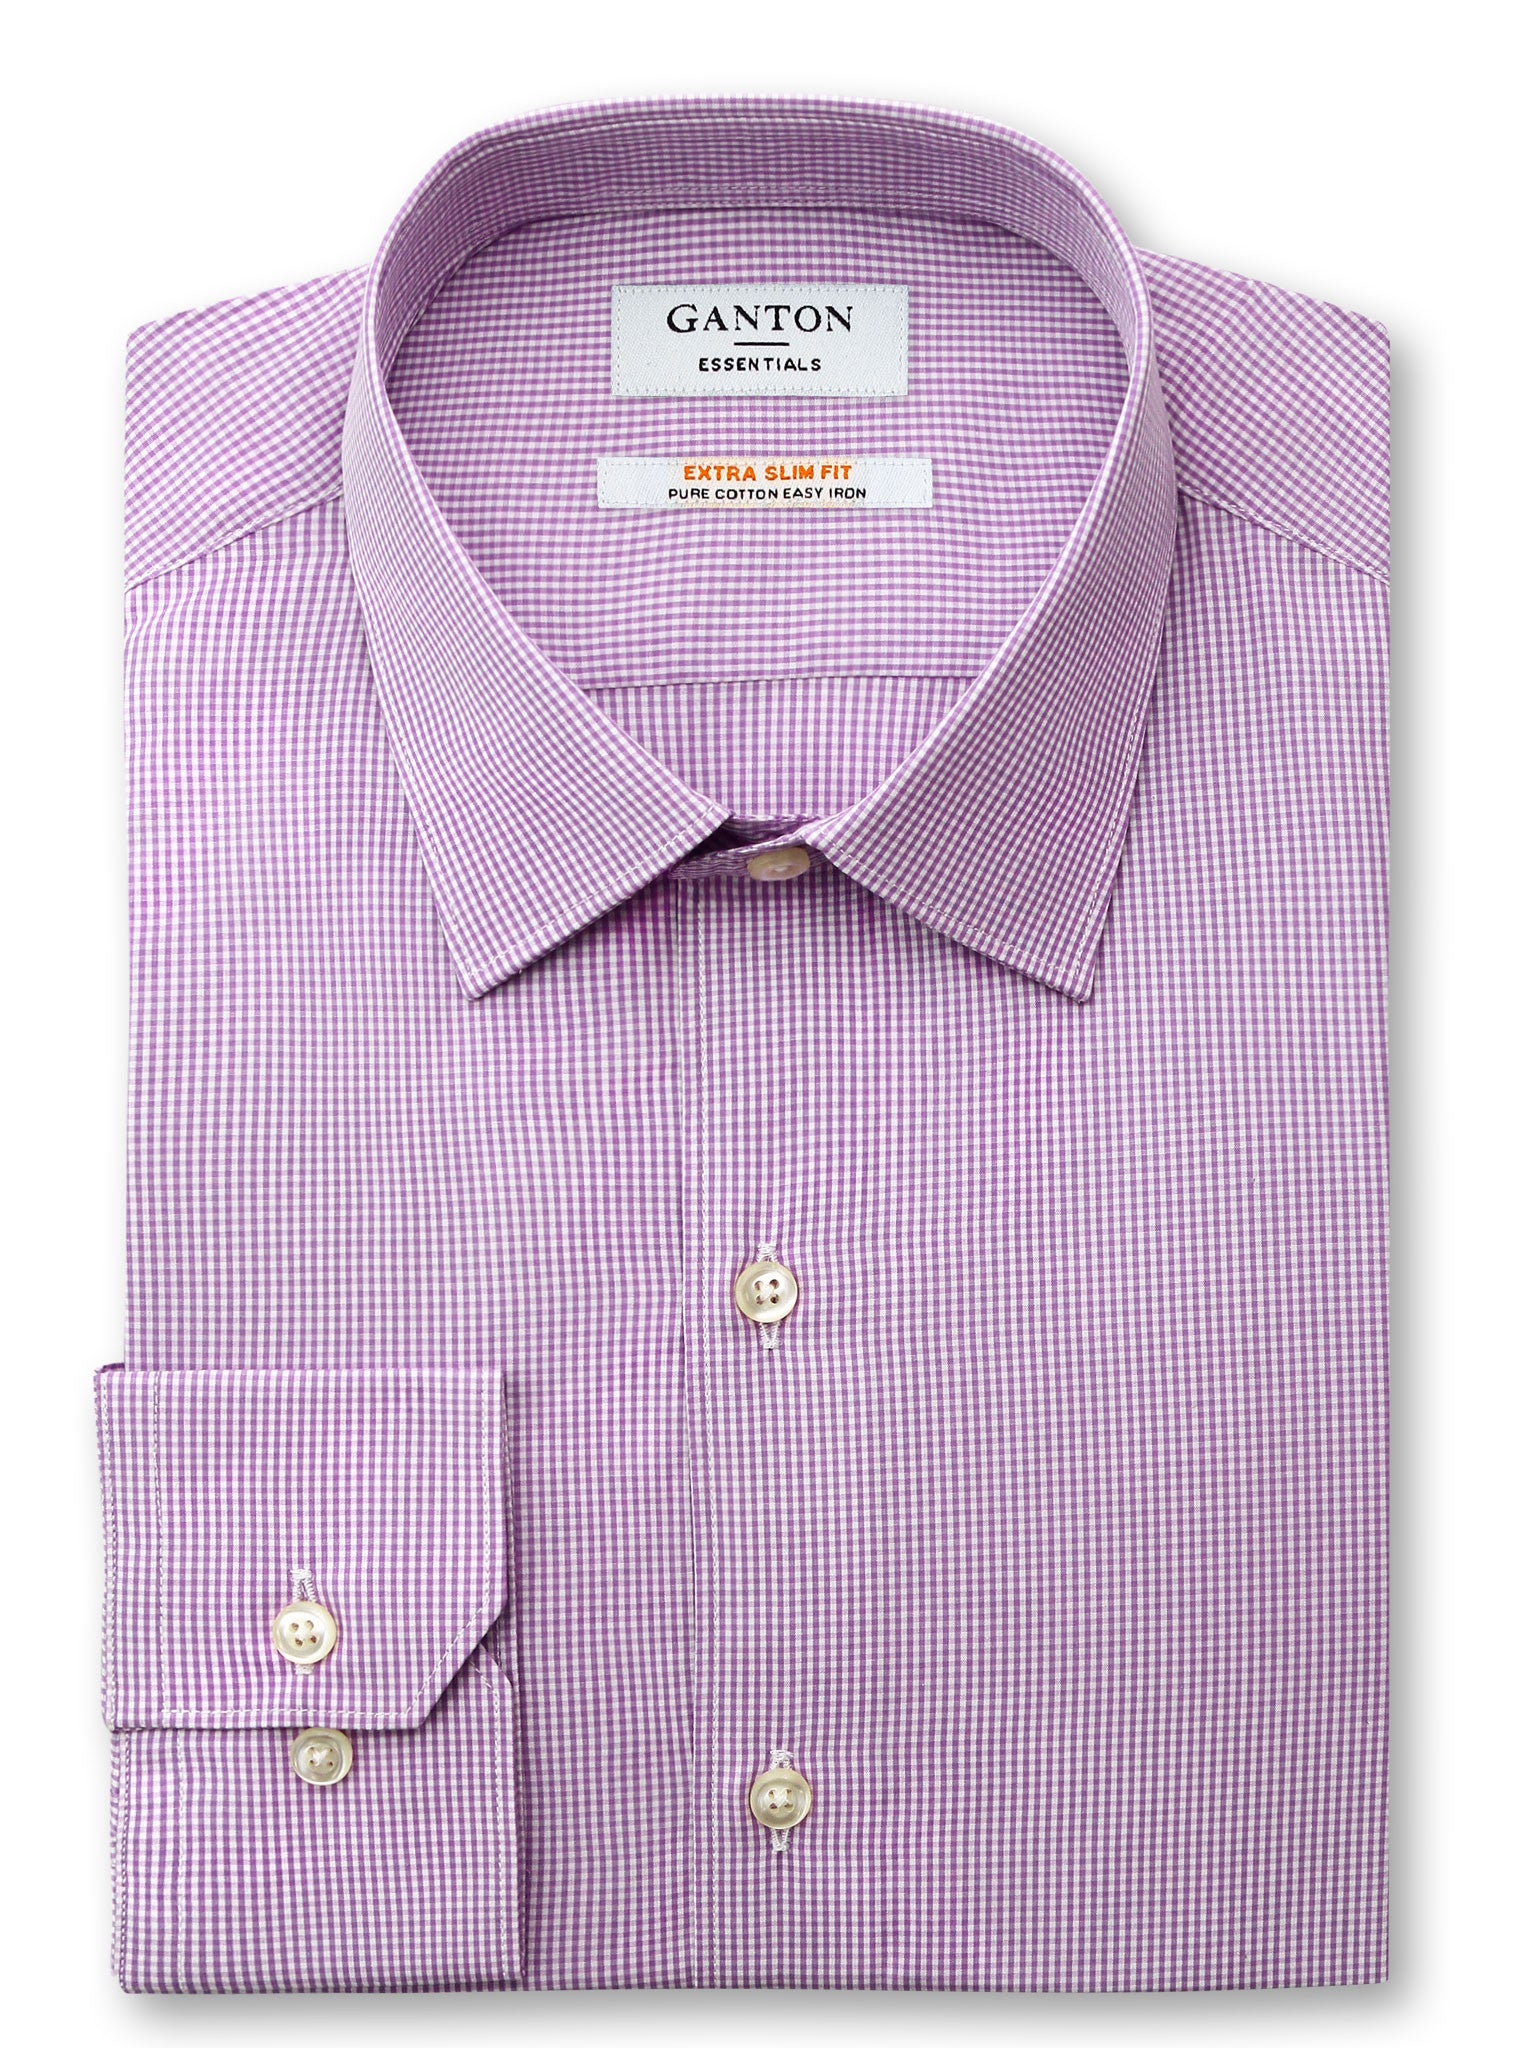 Ganton Business Shirts - Shirt Bar